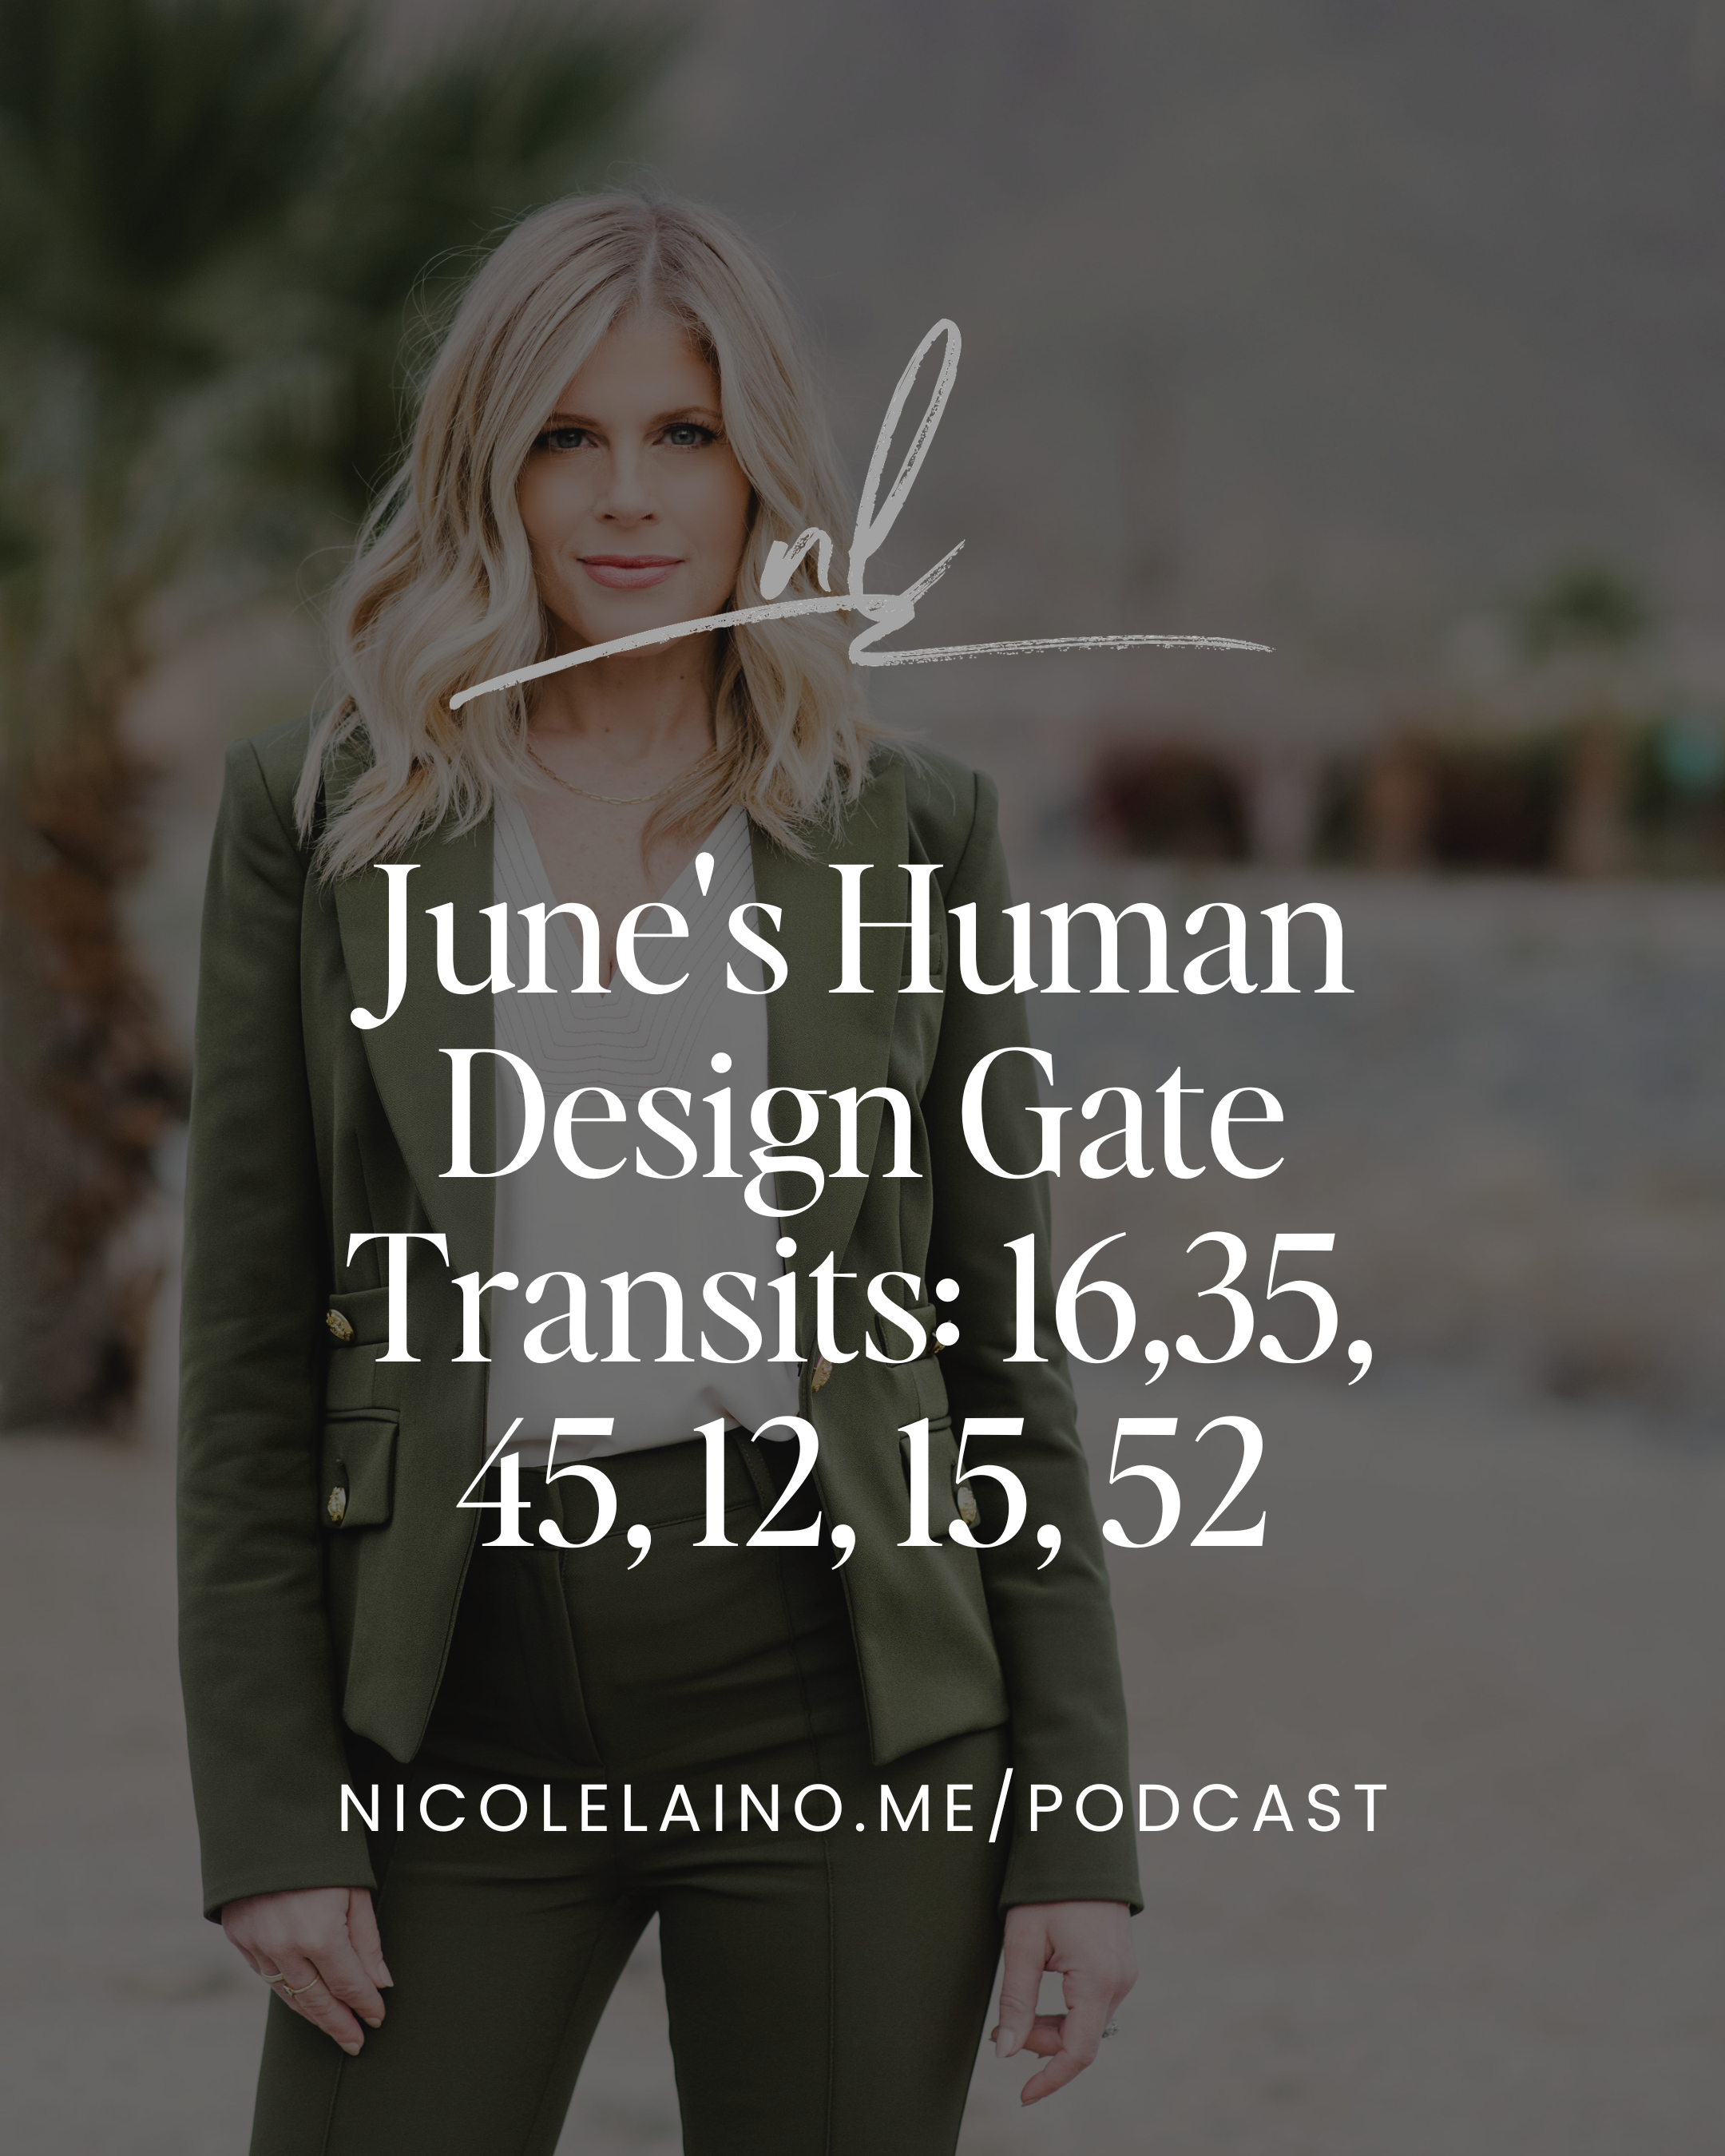 June's Human Design Gate Transits: 16,35, 45, 12, 15, 52